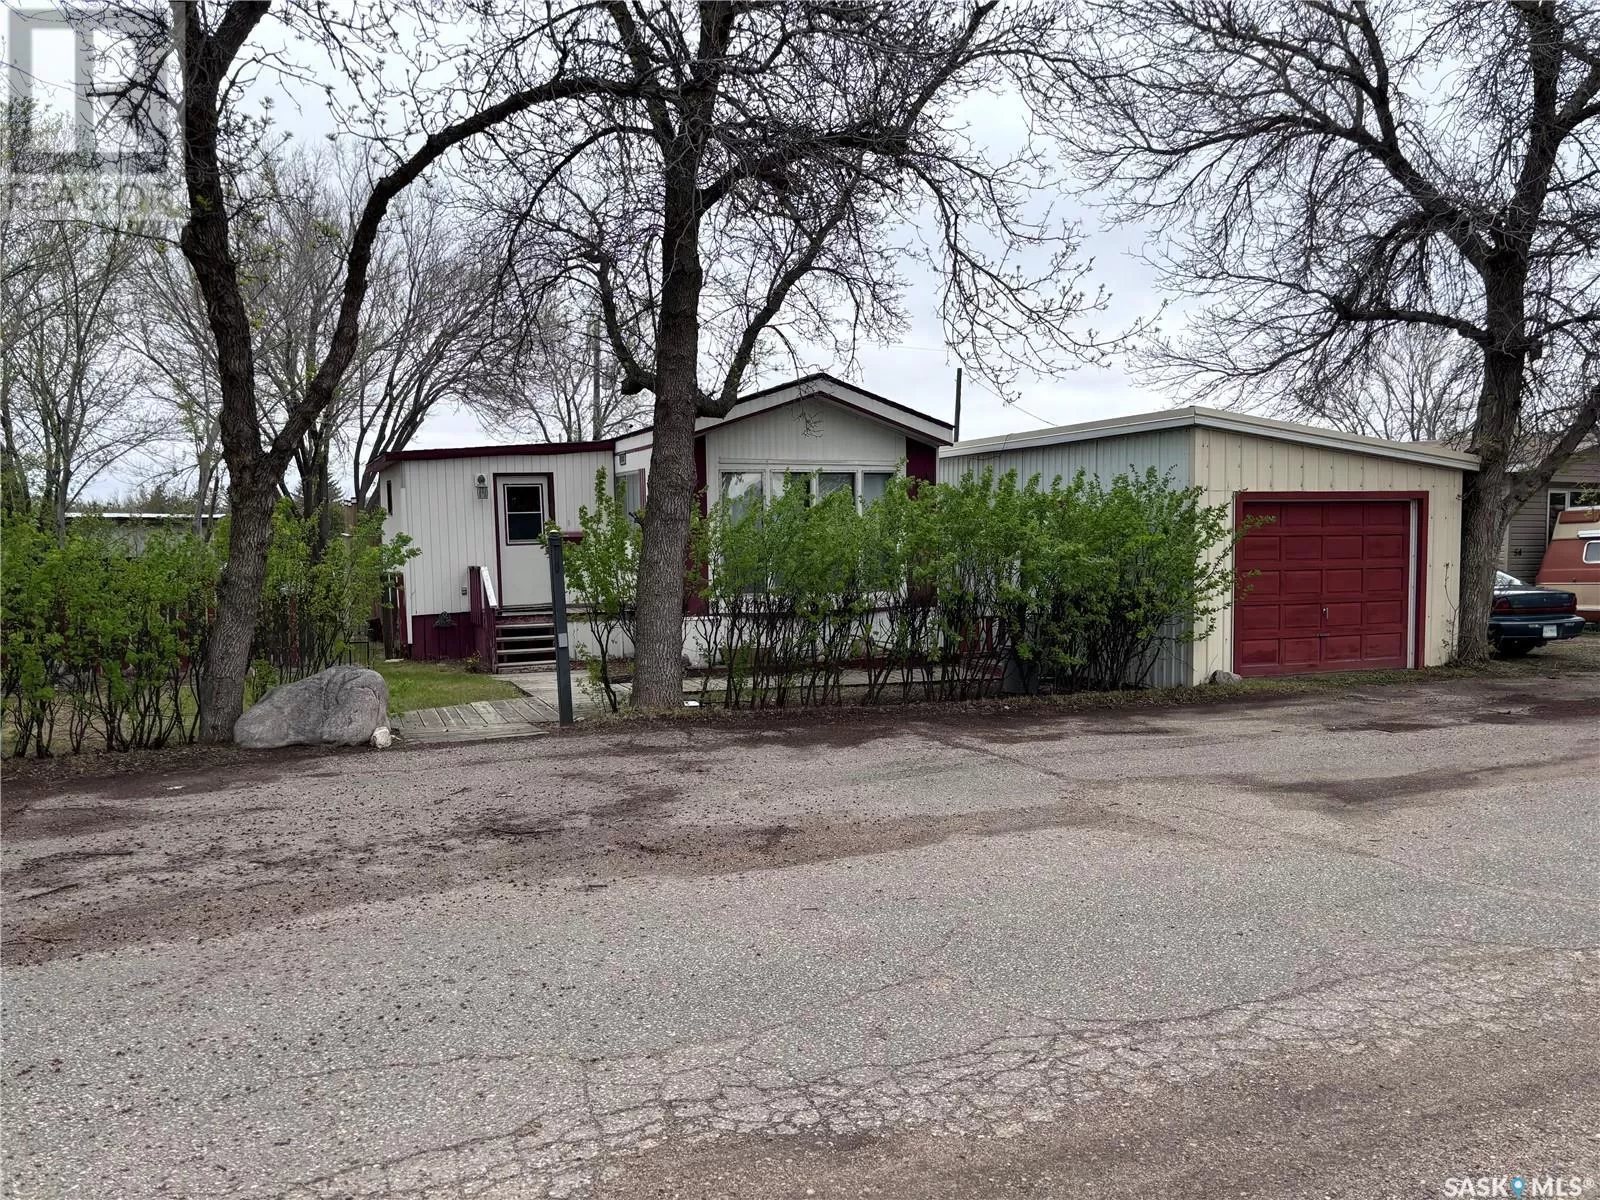 Mobile Home for rent: Ponderosa Trailer Court, Swift Current, Saskatchewan S9H 3X6